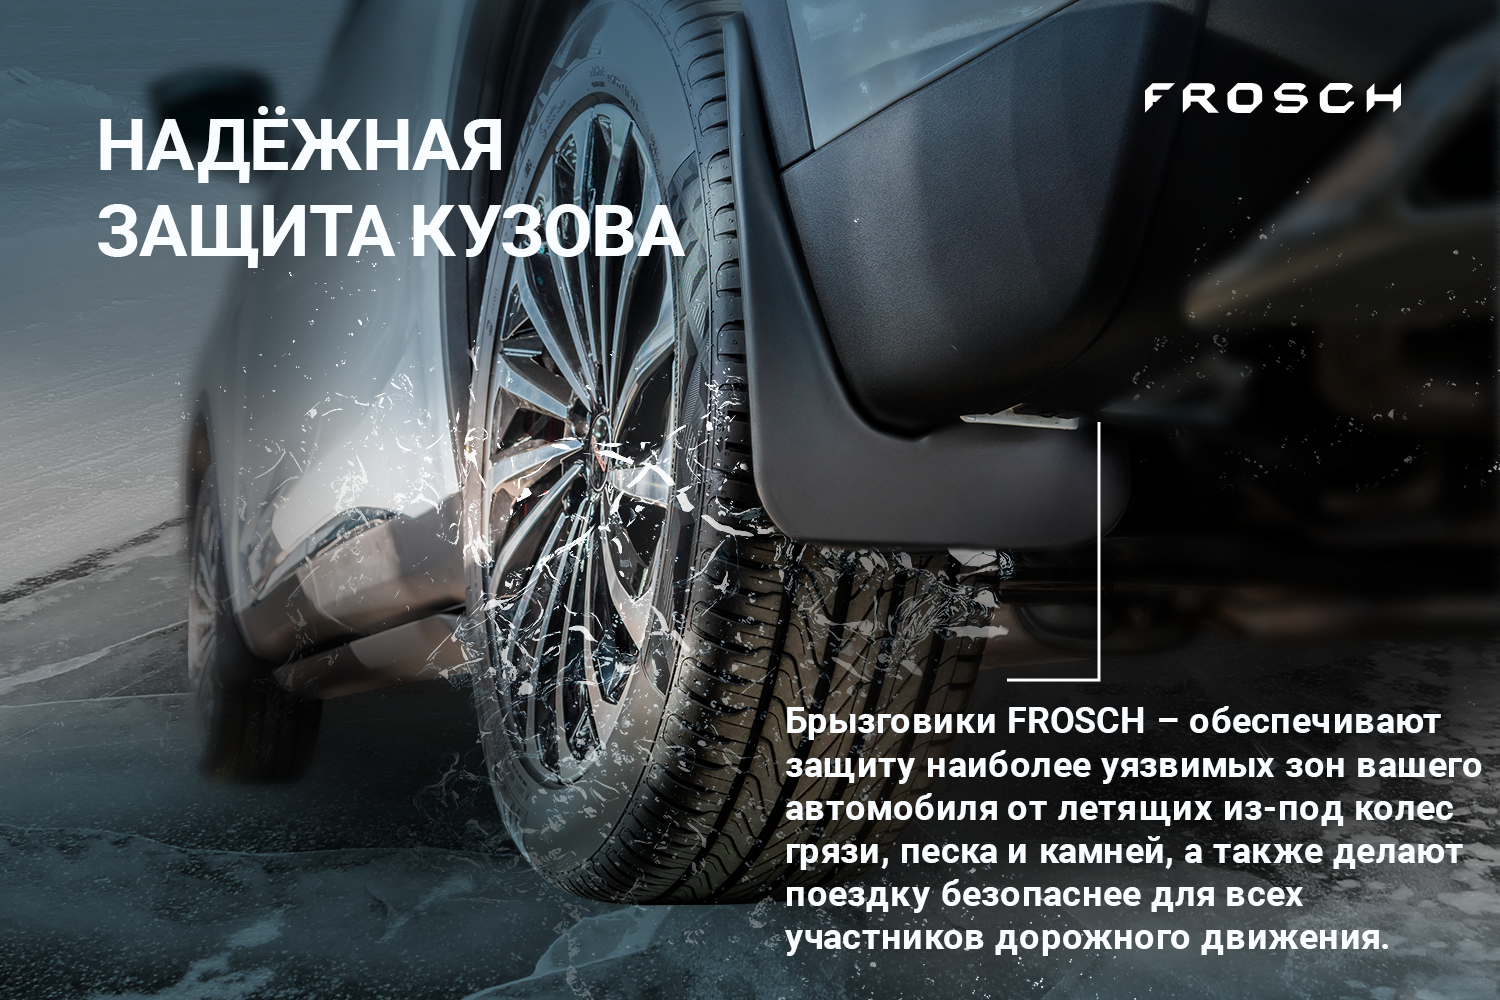 Брызговики передние FORD TRANSIT 2014 (фургон) полиуретановые в пакете 2шт Frosch - фото №8